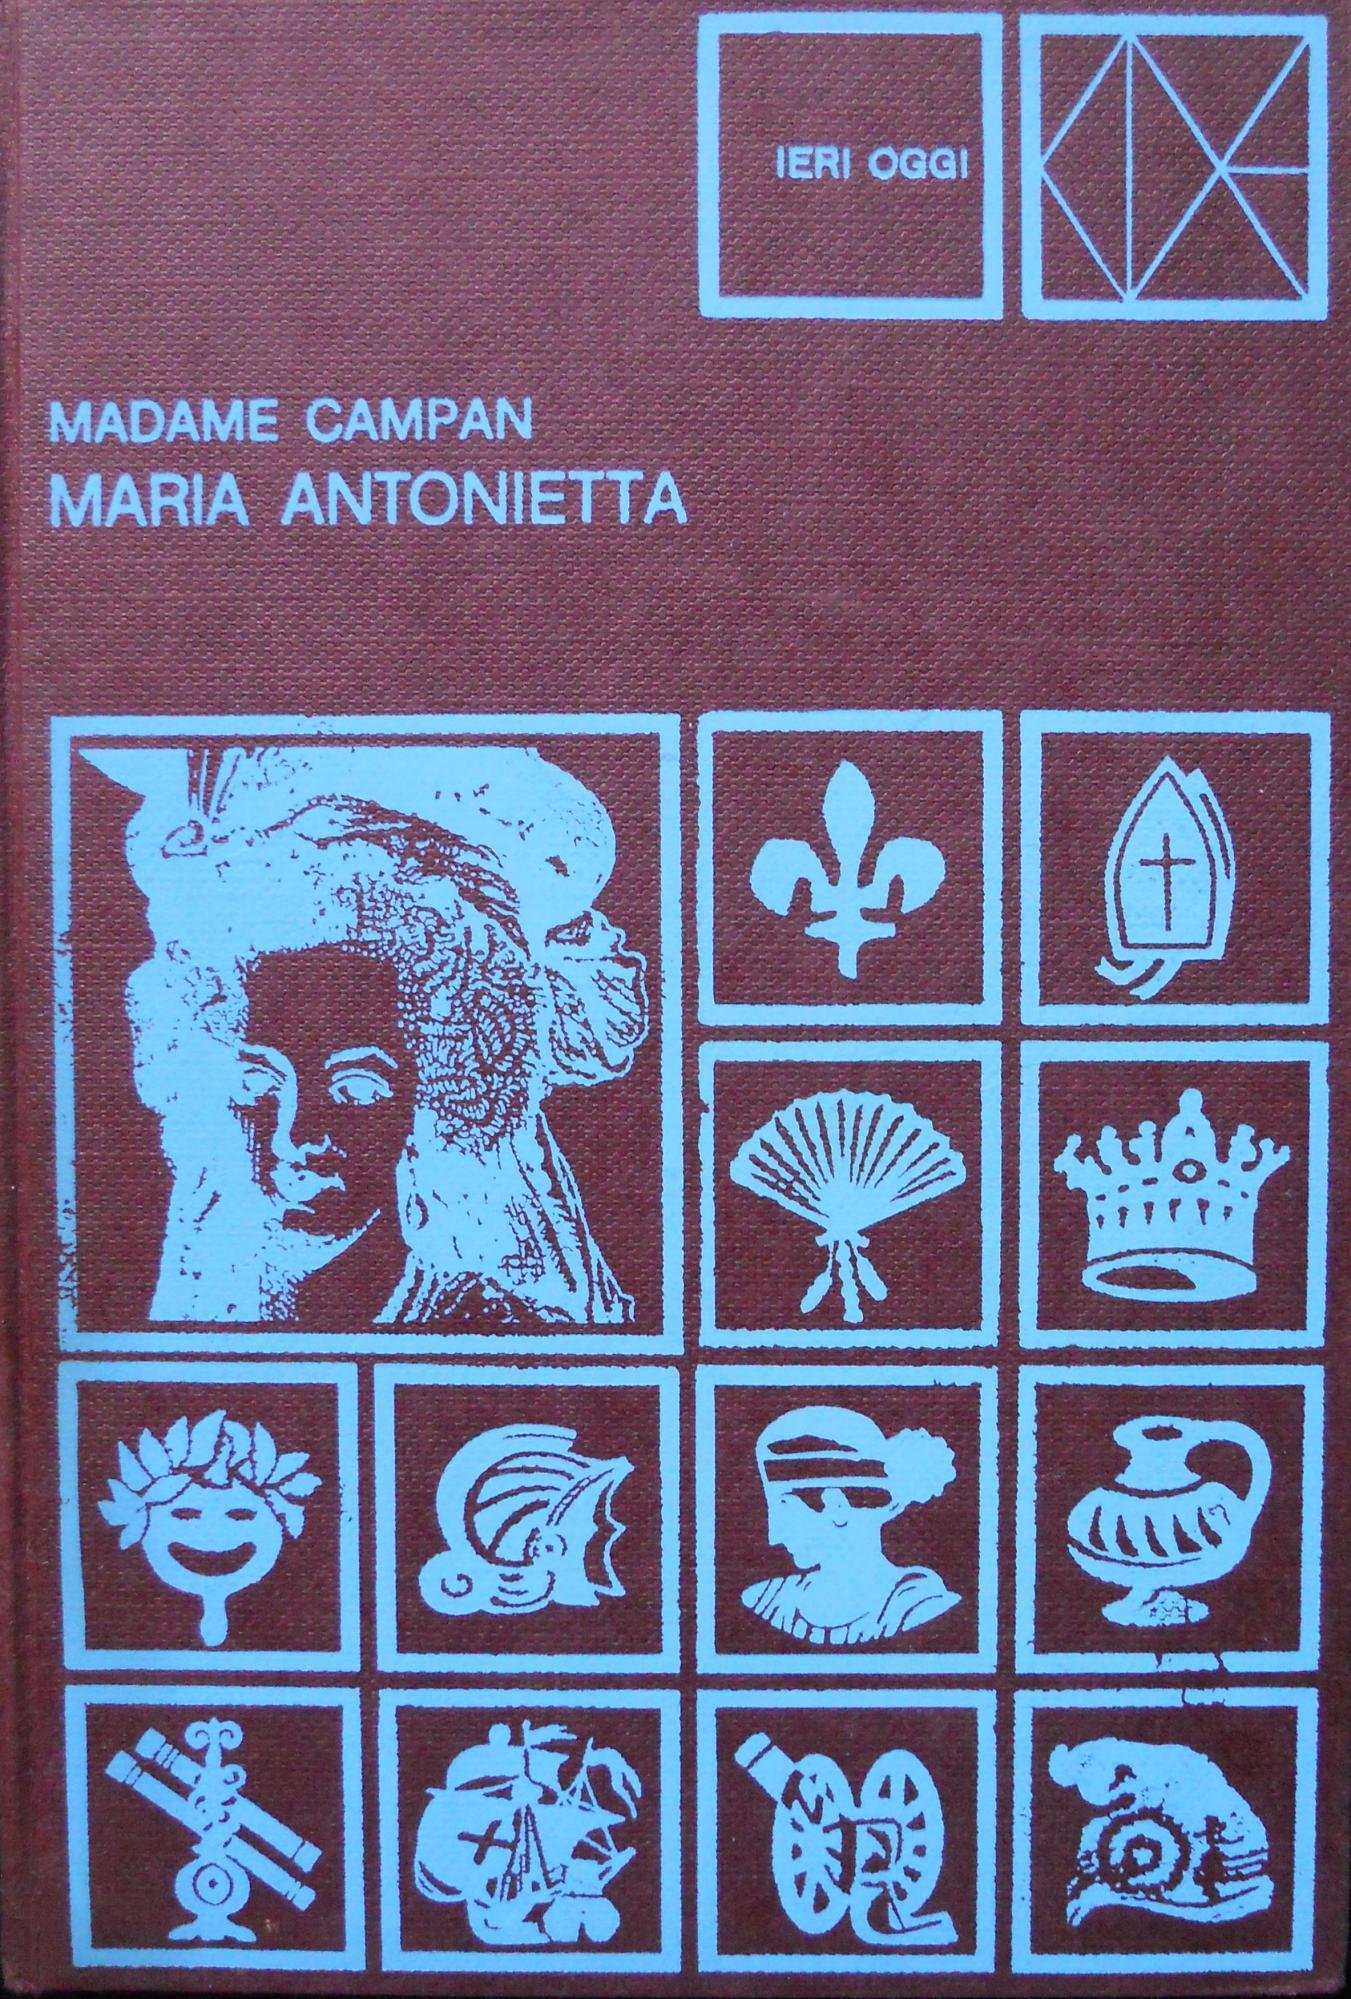 Copertina di Maria Antonietta